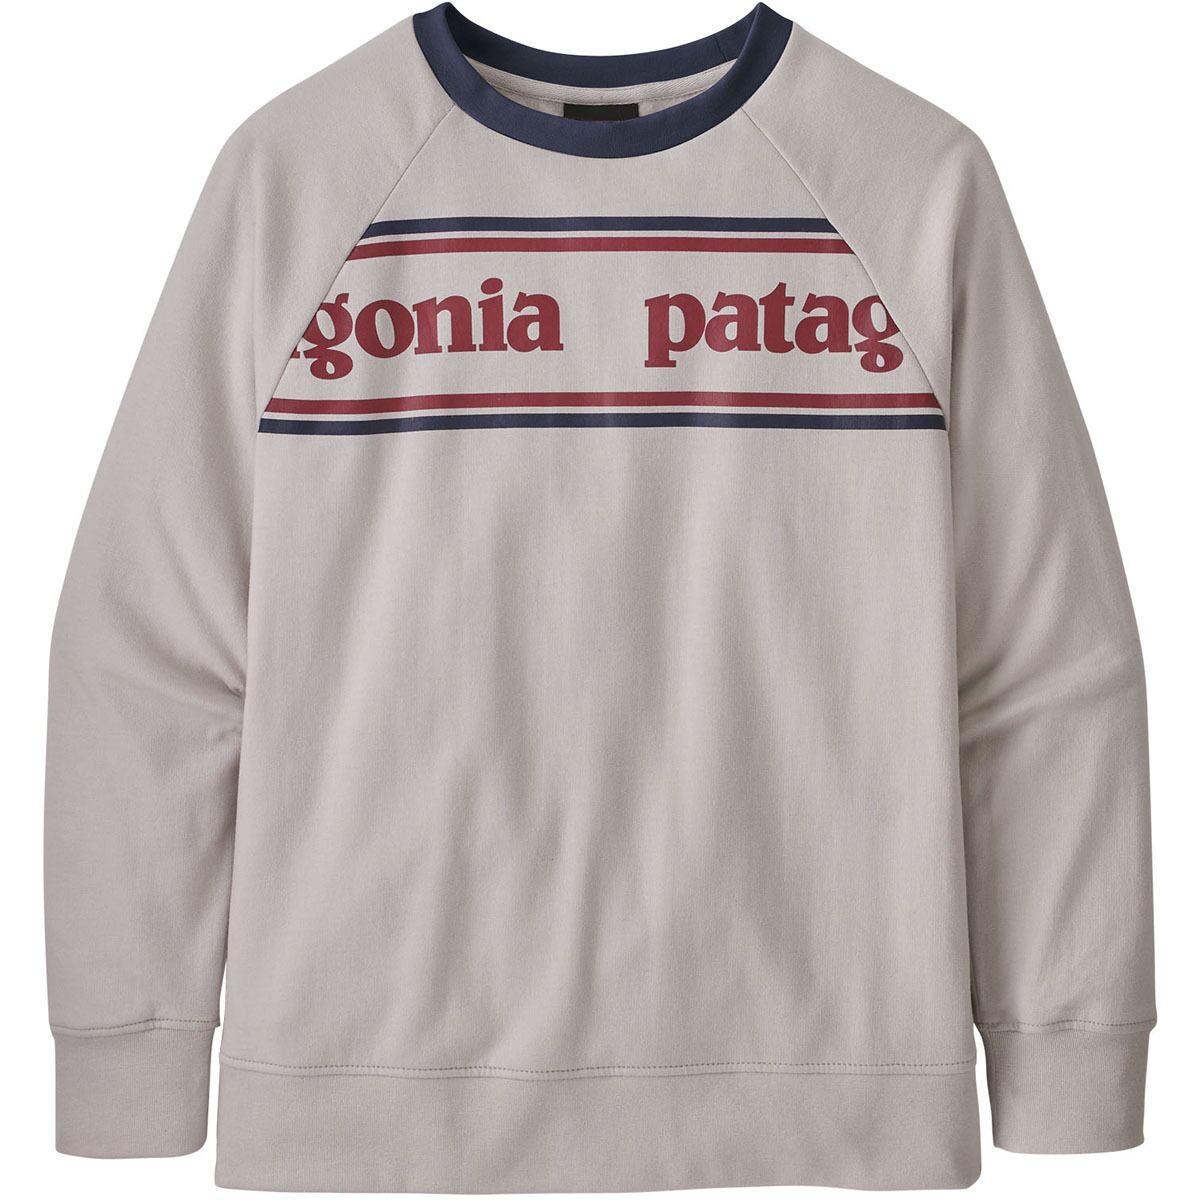 Patagonia Lightweight Crew Sweatshirt - Boys'